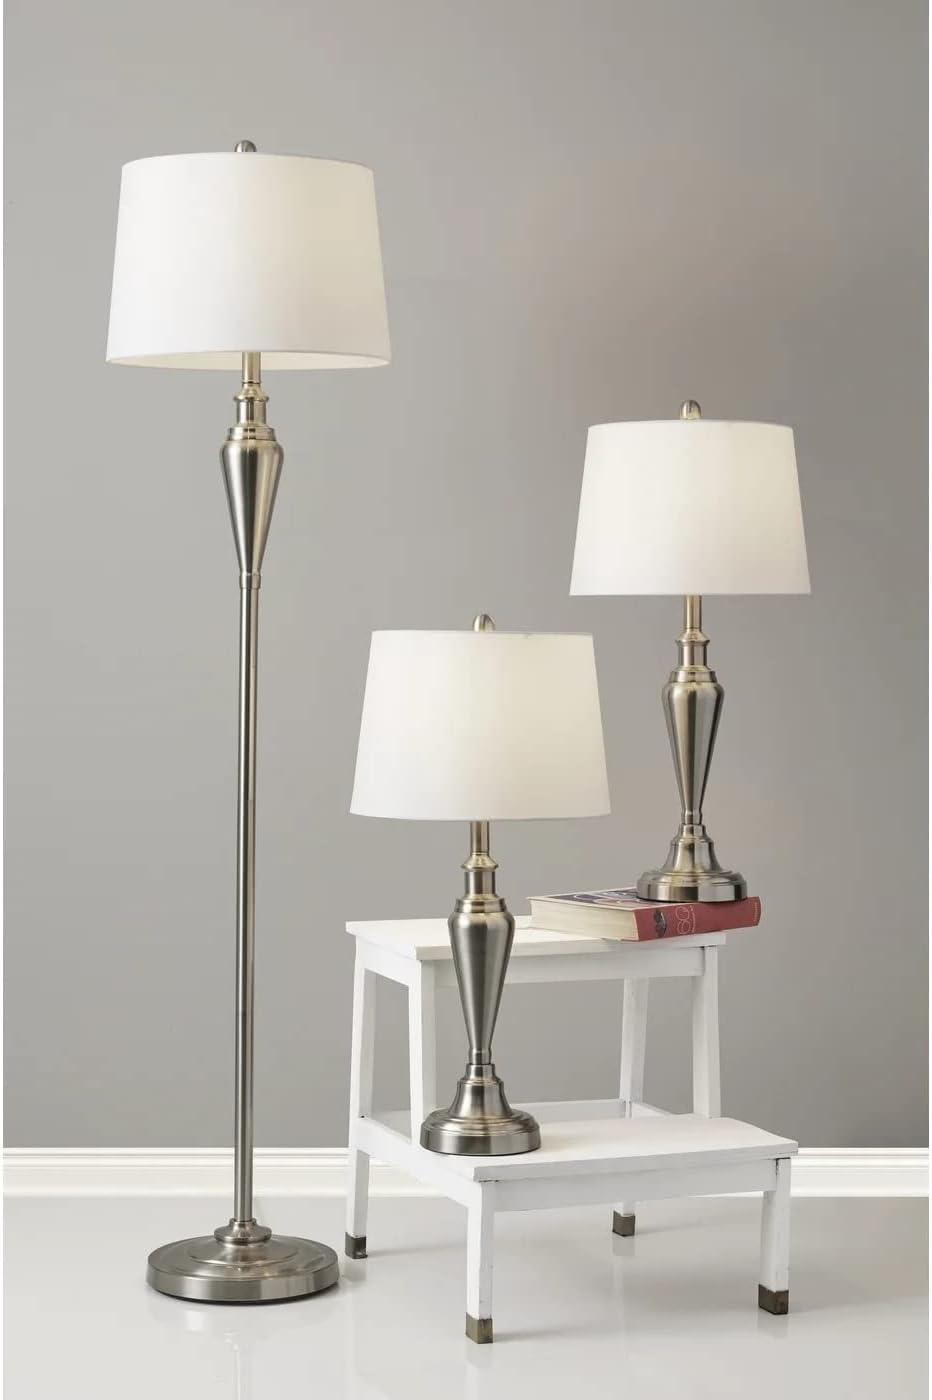 Elegant Antique Brass 3-Piece Lamp Set with Textured White Linen Shades